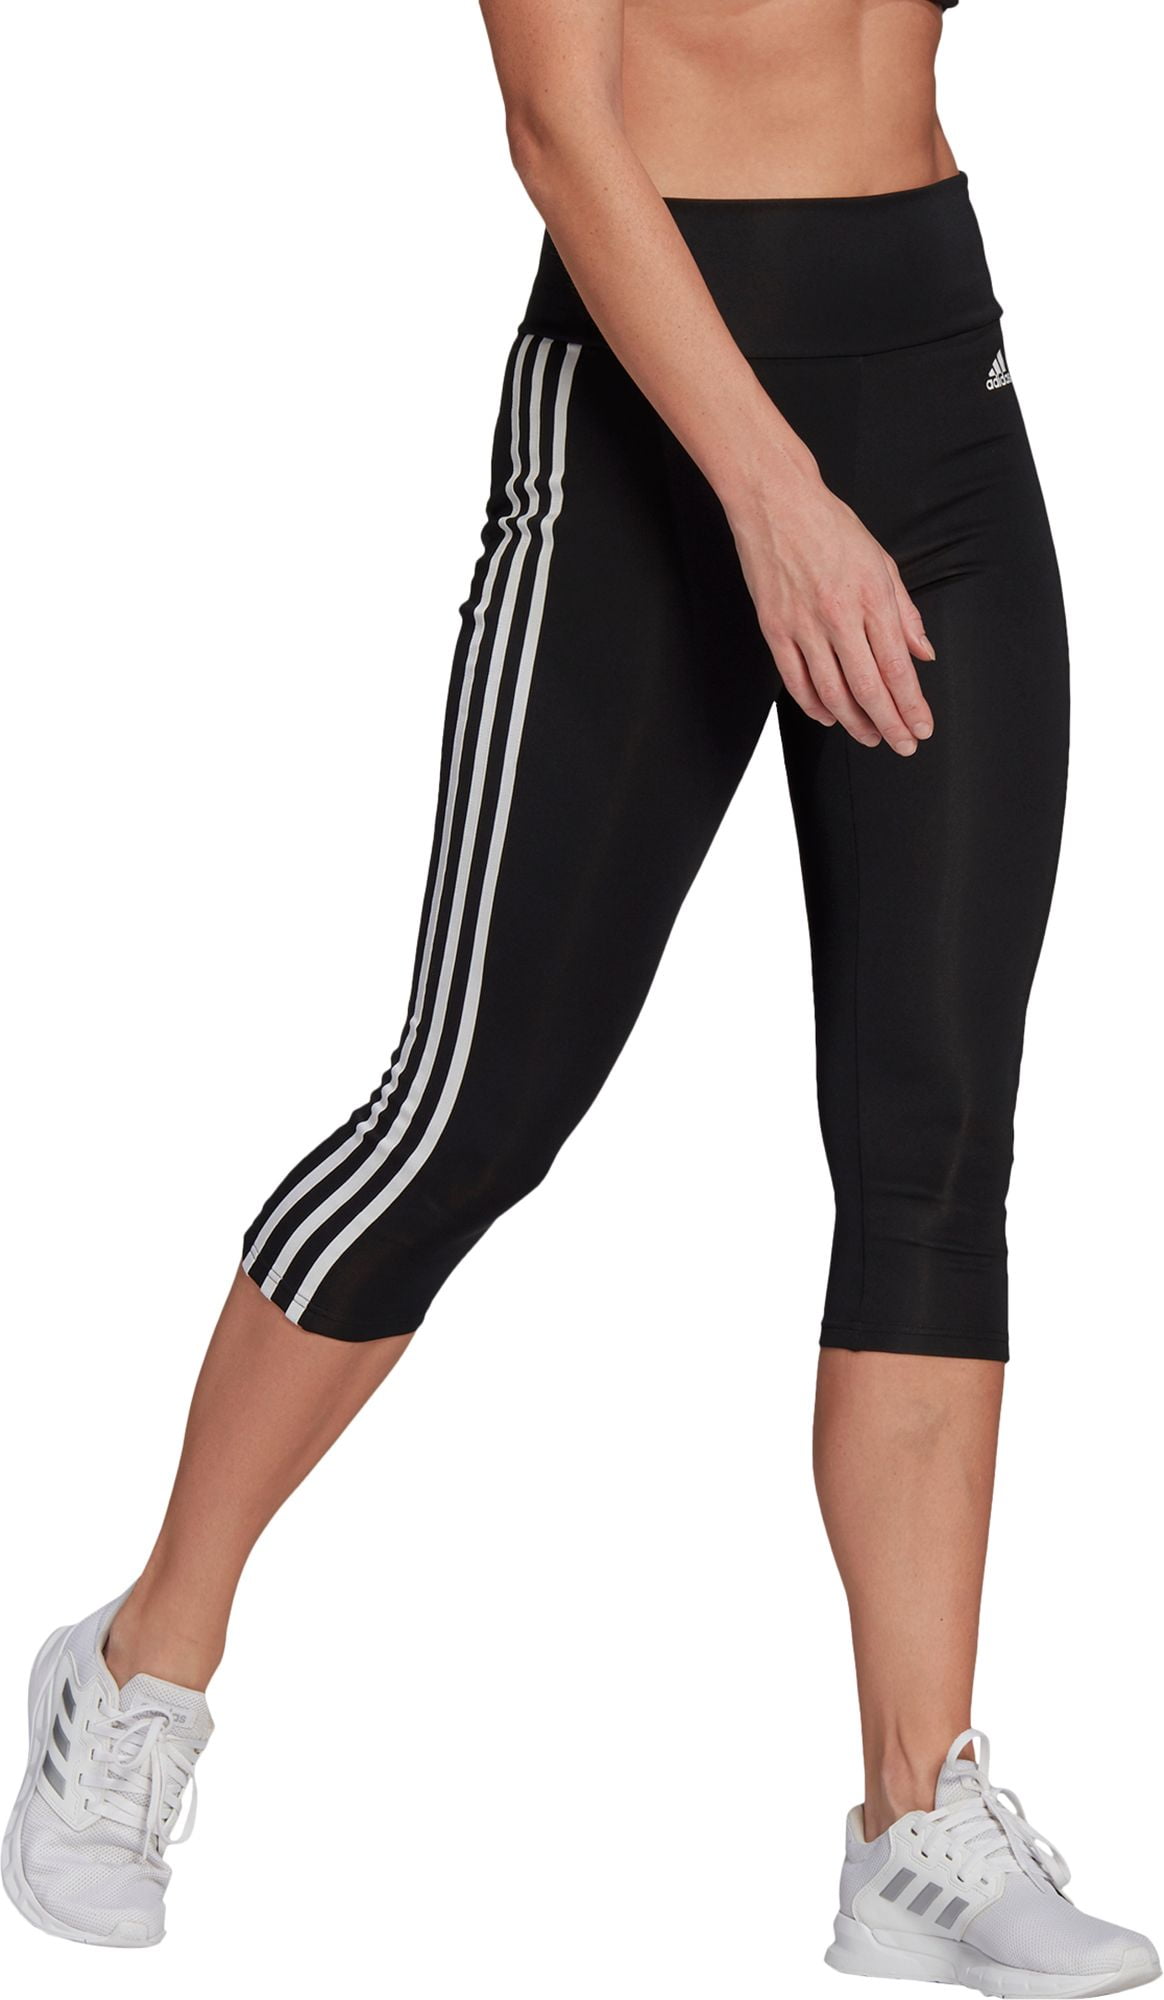 adidas Women's Designed Move High-Rise 3-Stripes 3/4 Sport Tights, Black/White, S Walmart.com